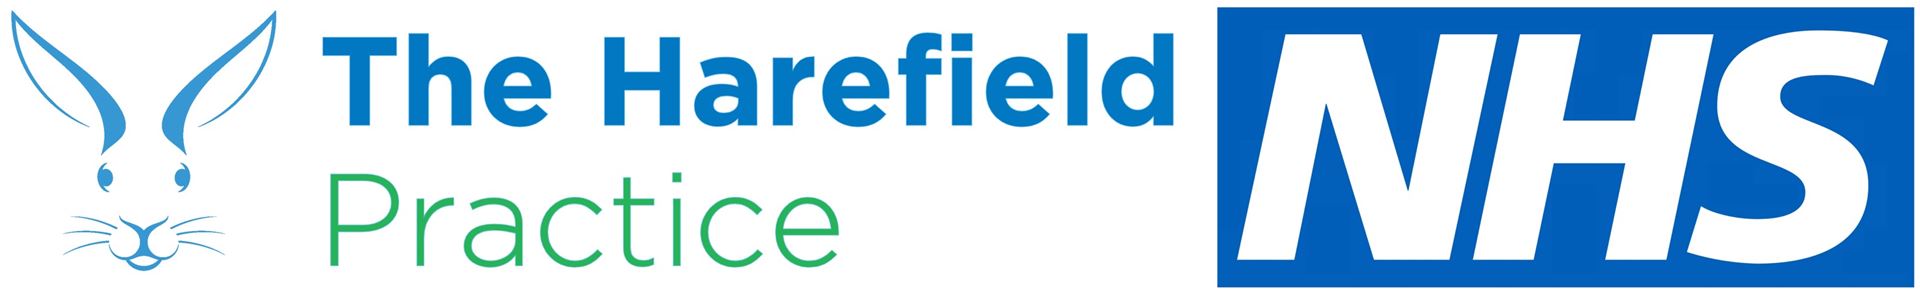 The Harefield Practice Logo